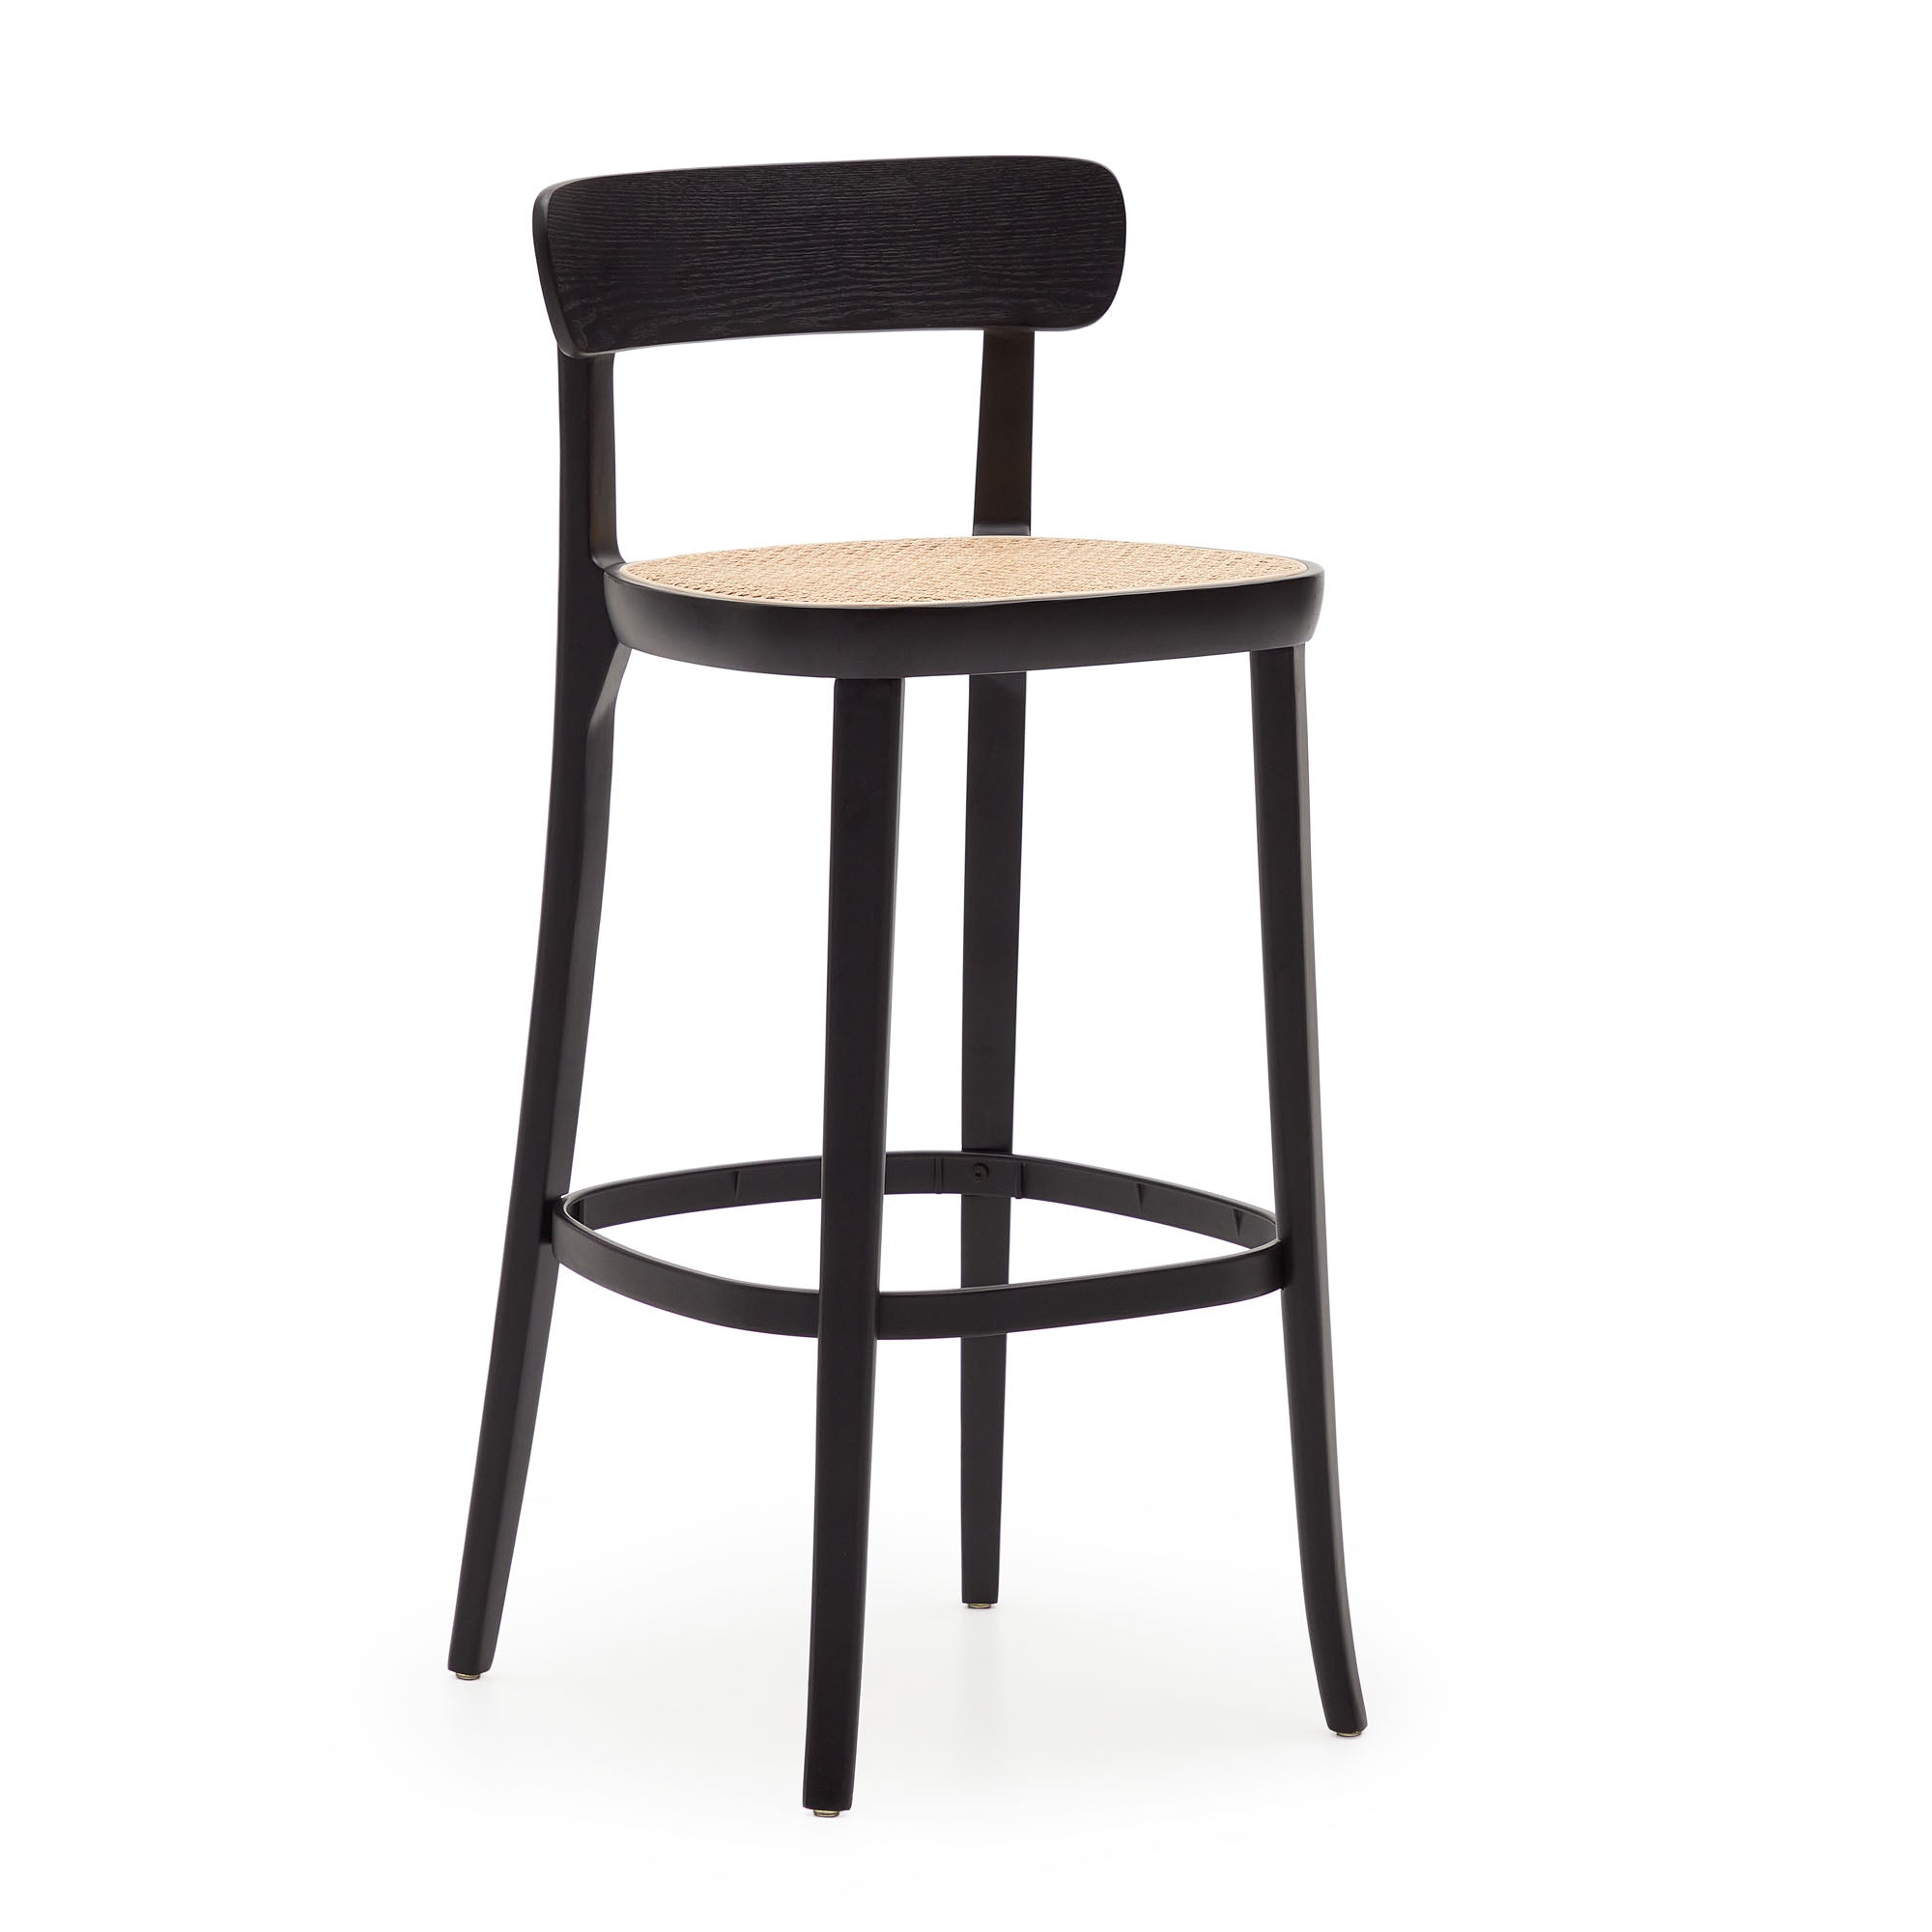 Romane beechwood stool with a black finish, ash wood veneer and ratan seat height 75 cm